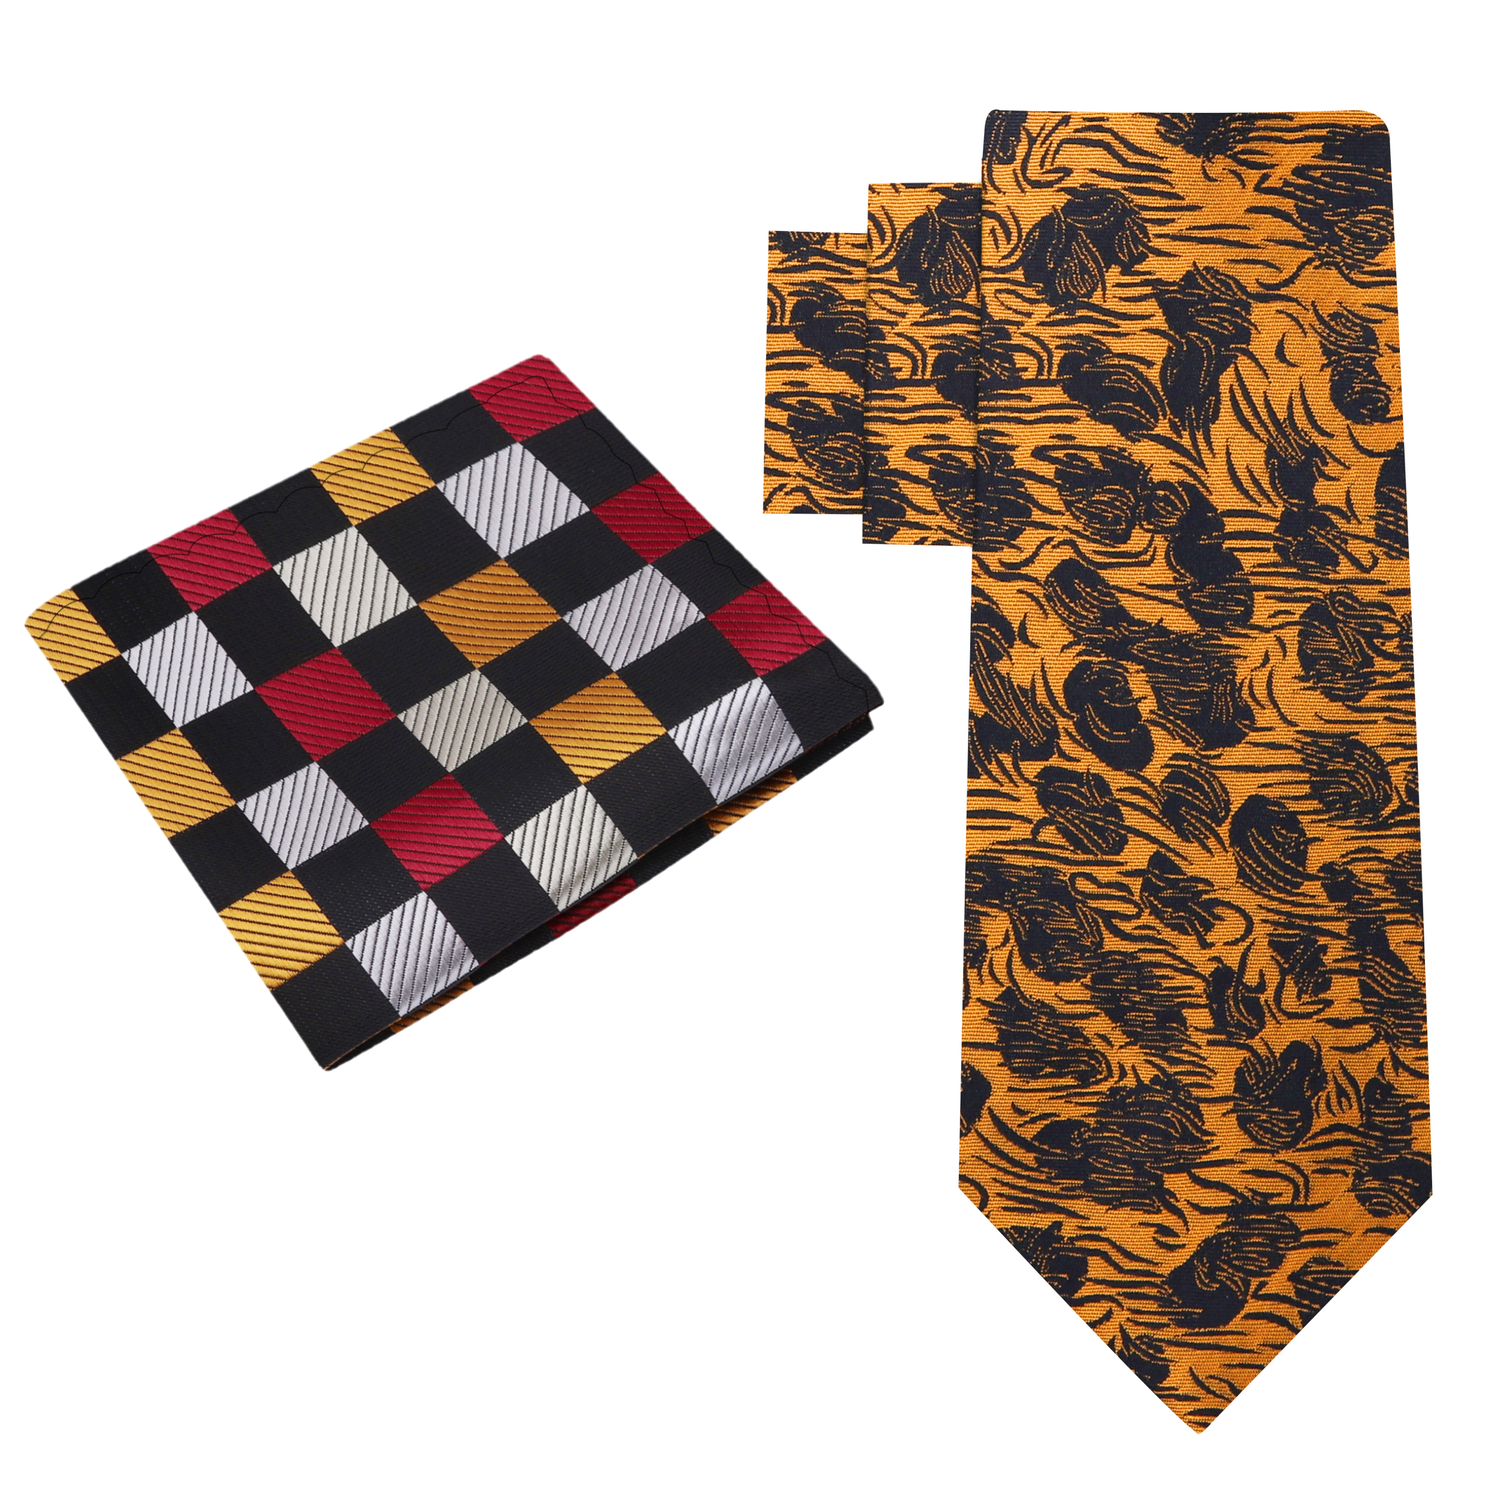 Alt View: Copper Orange and Black Abstract Tie and Silver, Copper, Black, Burgundy Check Square